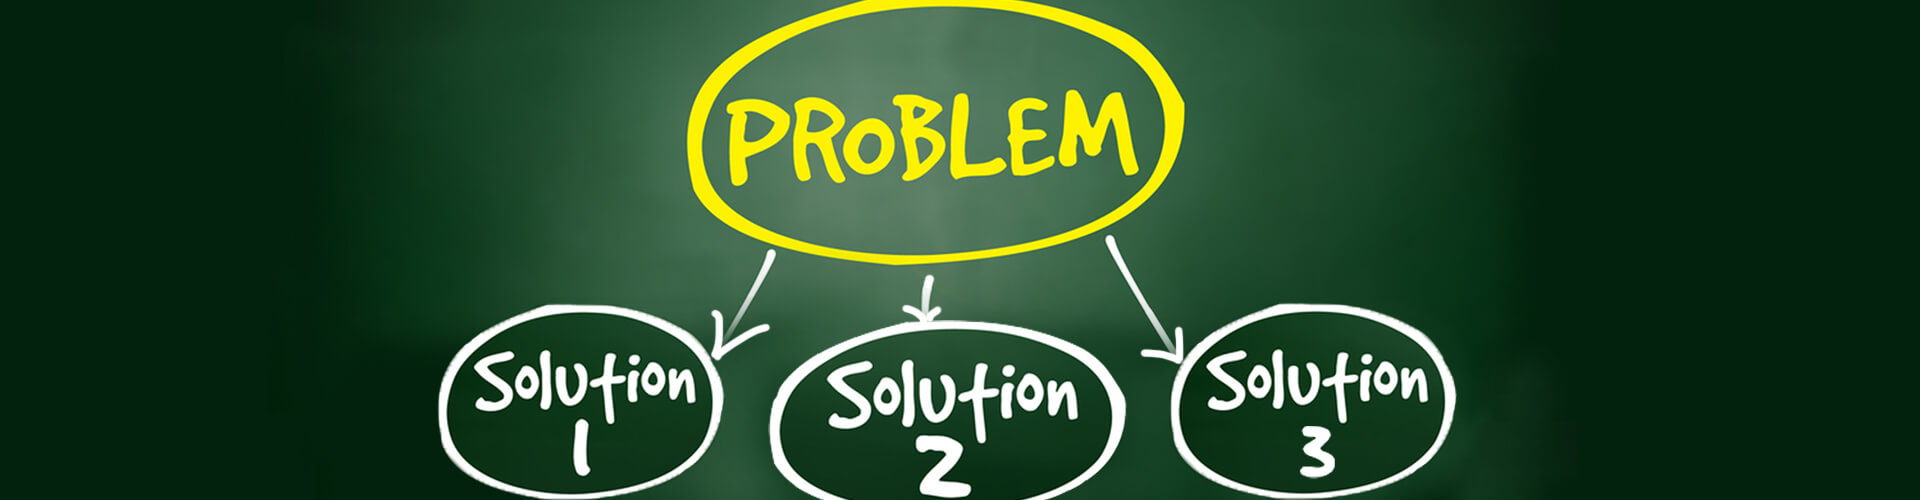 problem solving process step